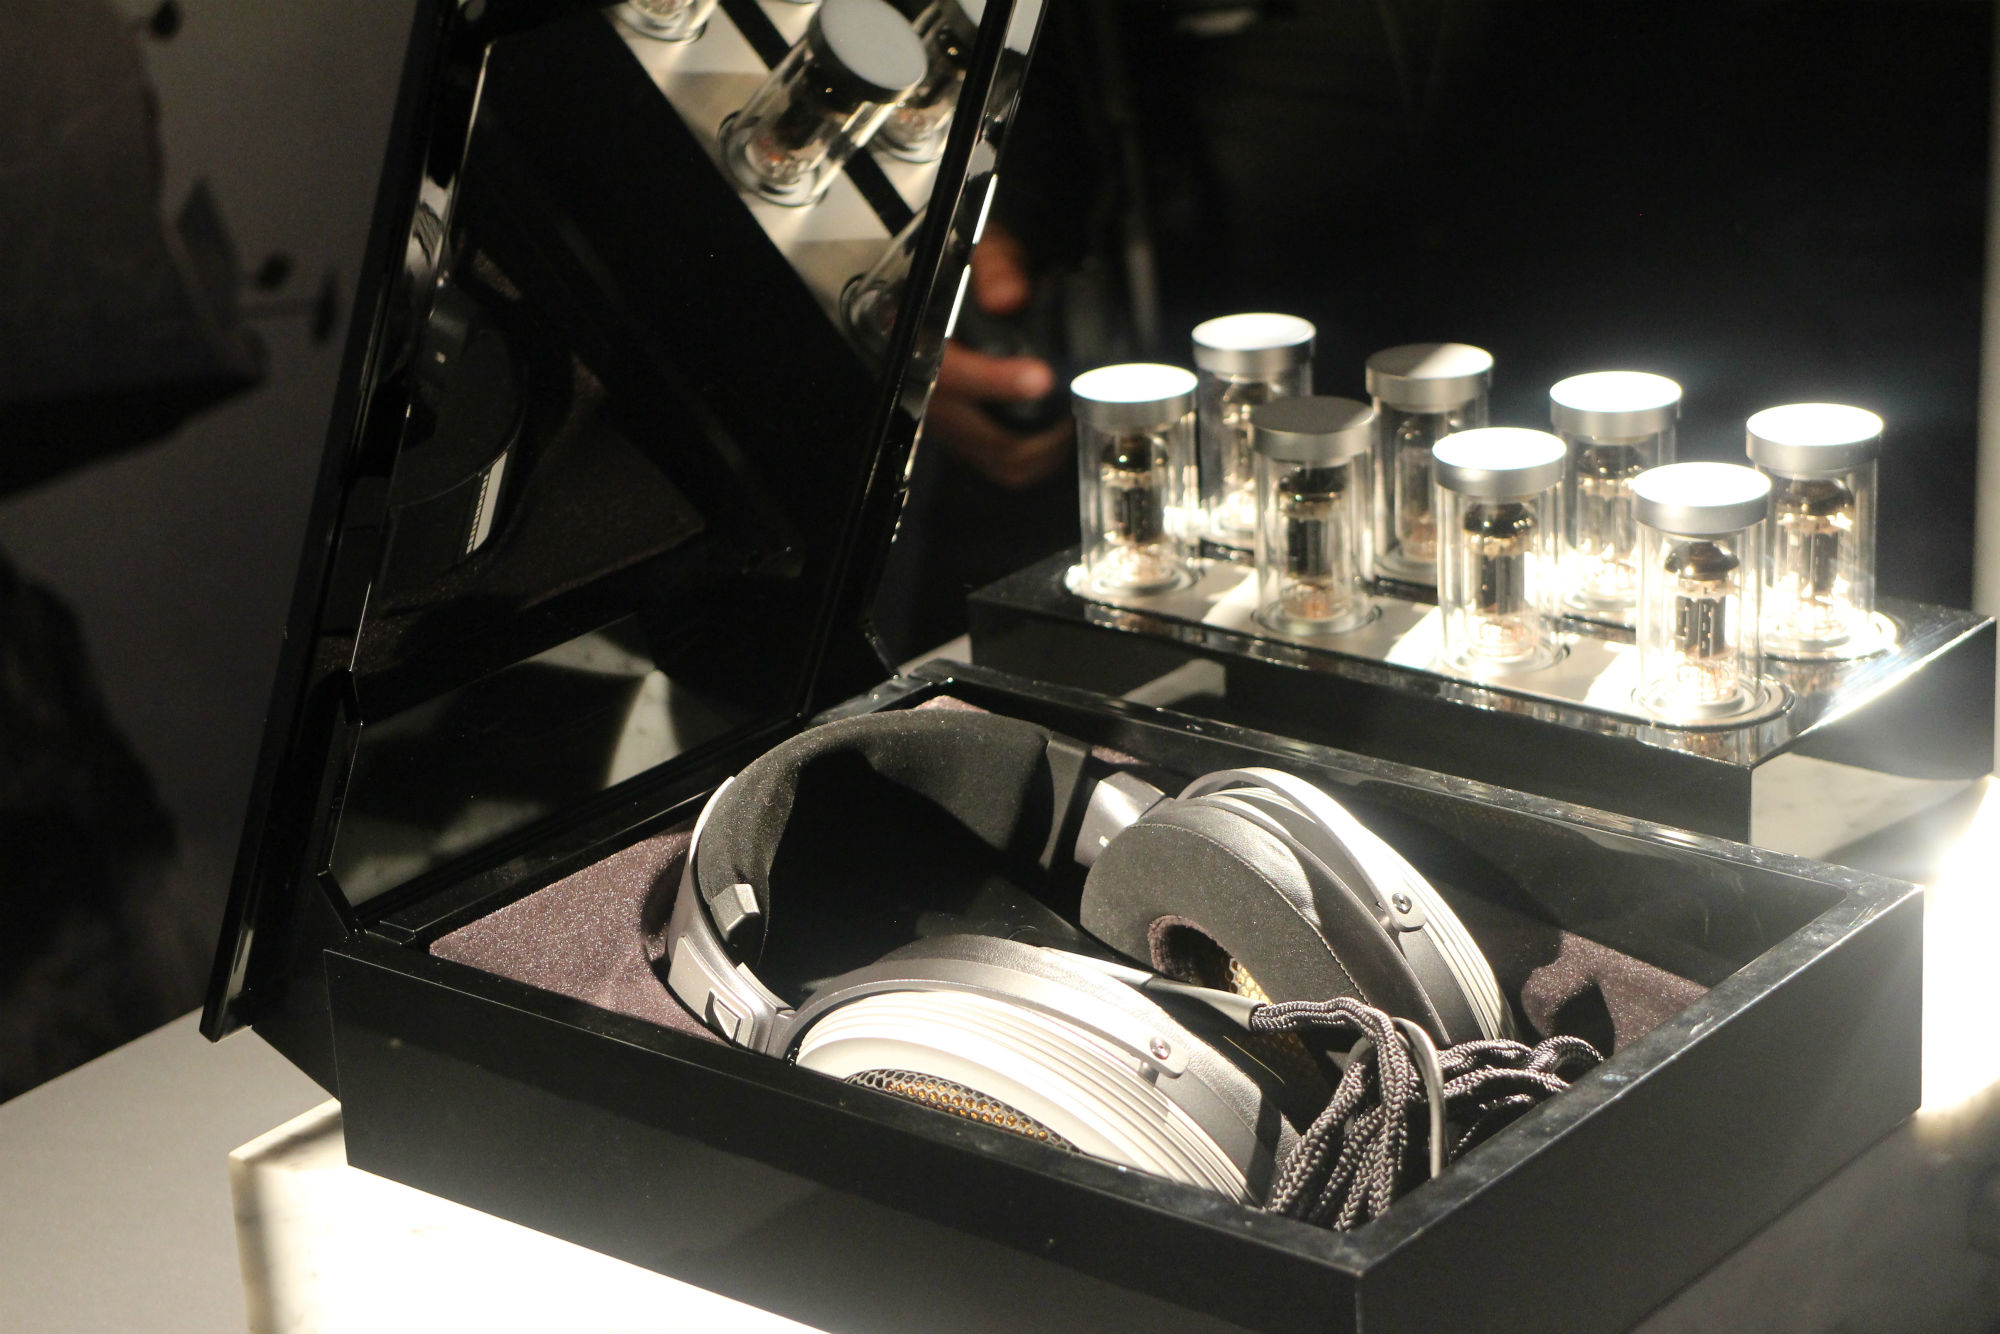 sennheiser new audiophile headphones carrara marble wifi london mystery cans and amp with  7